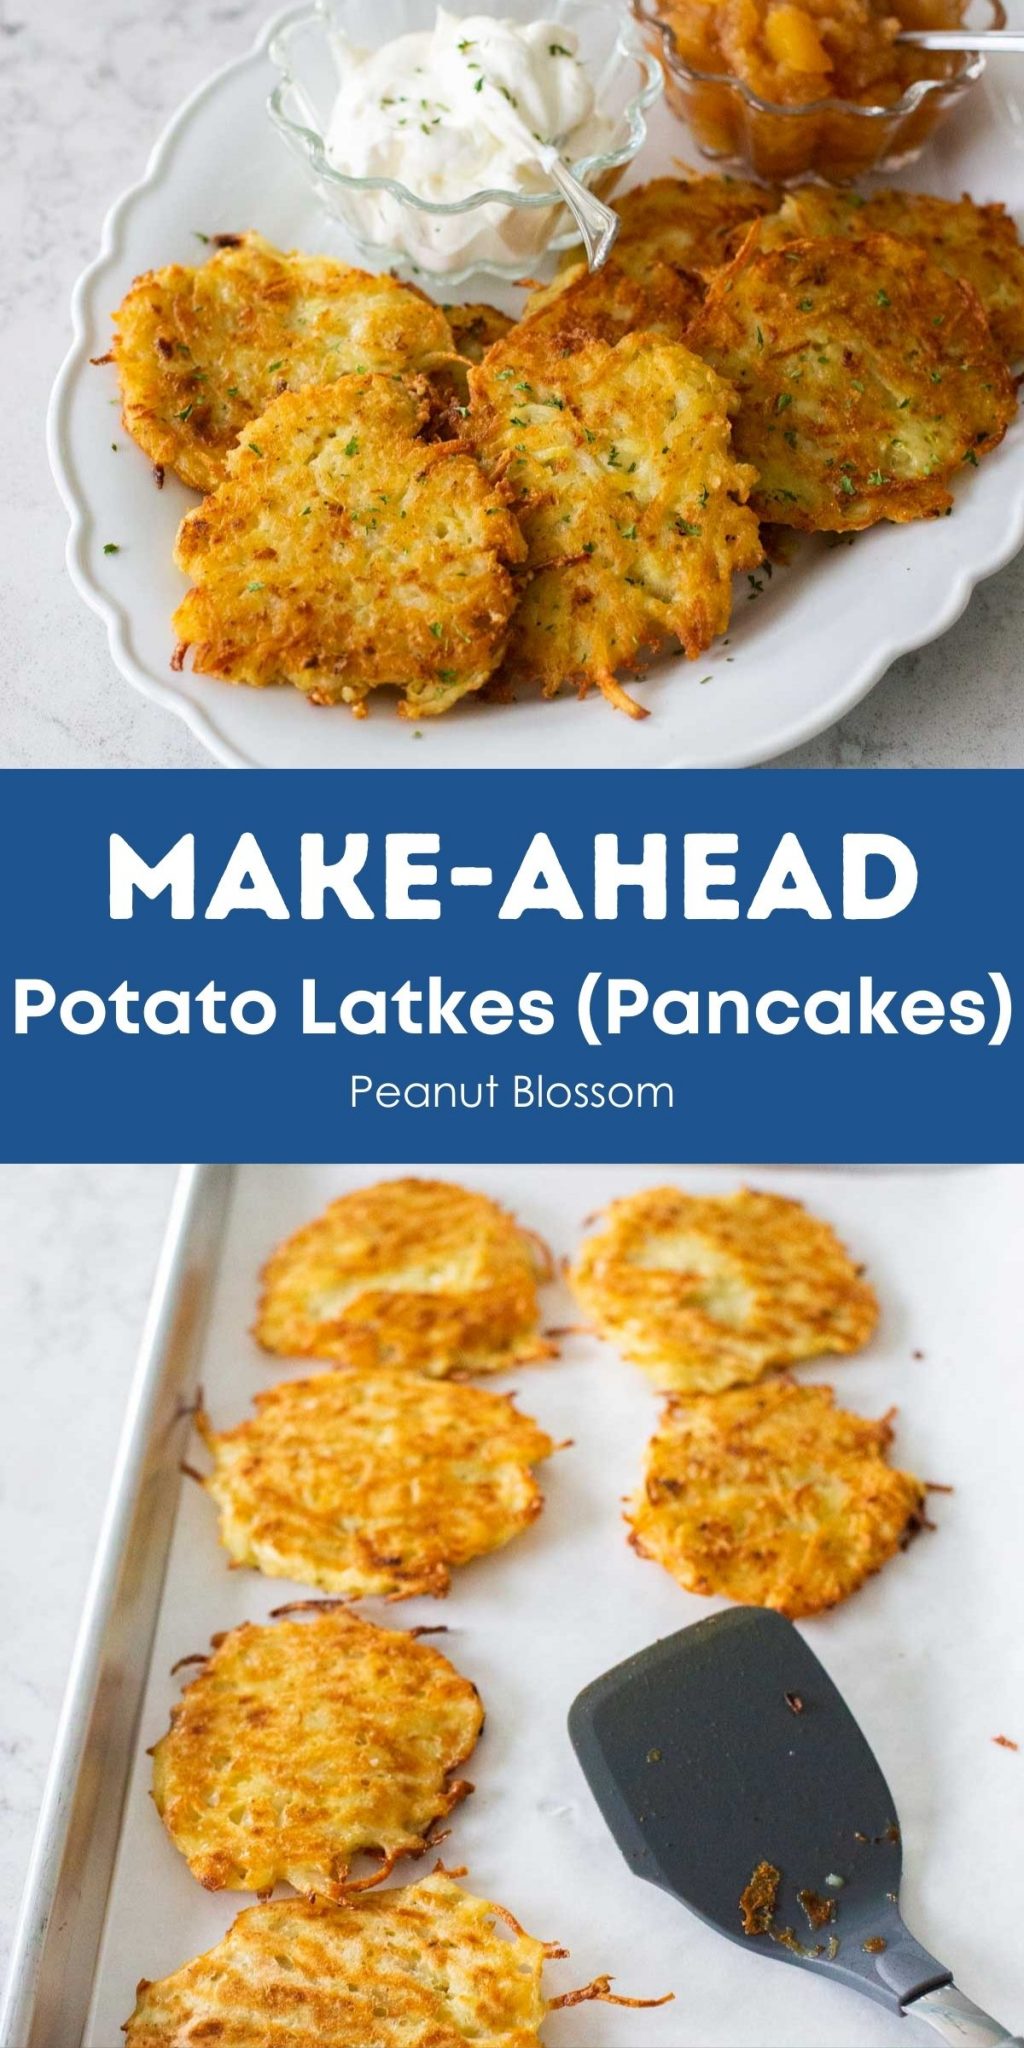 Make-Ahead Potato Latkes - Peanut Blossom